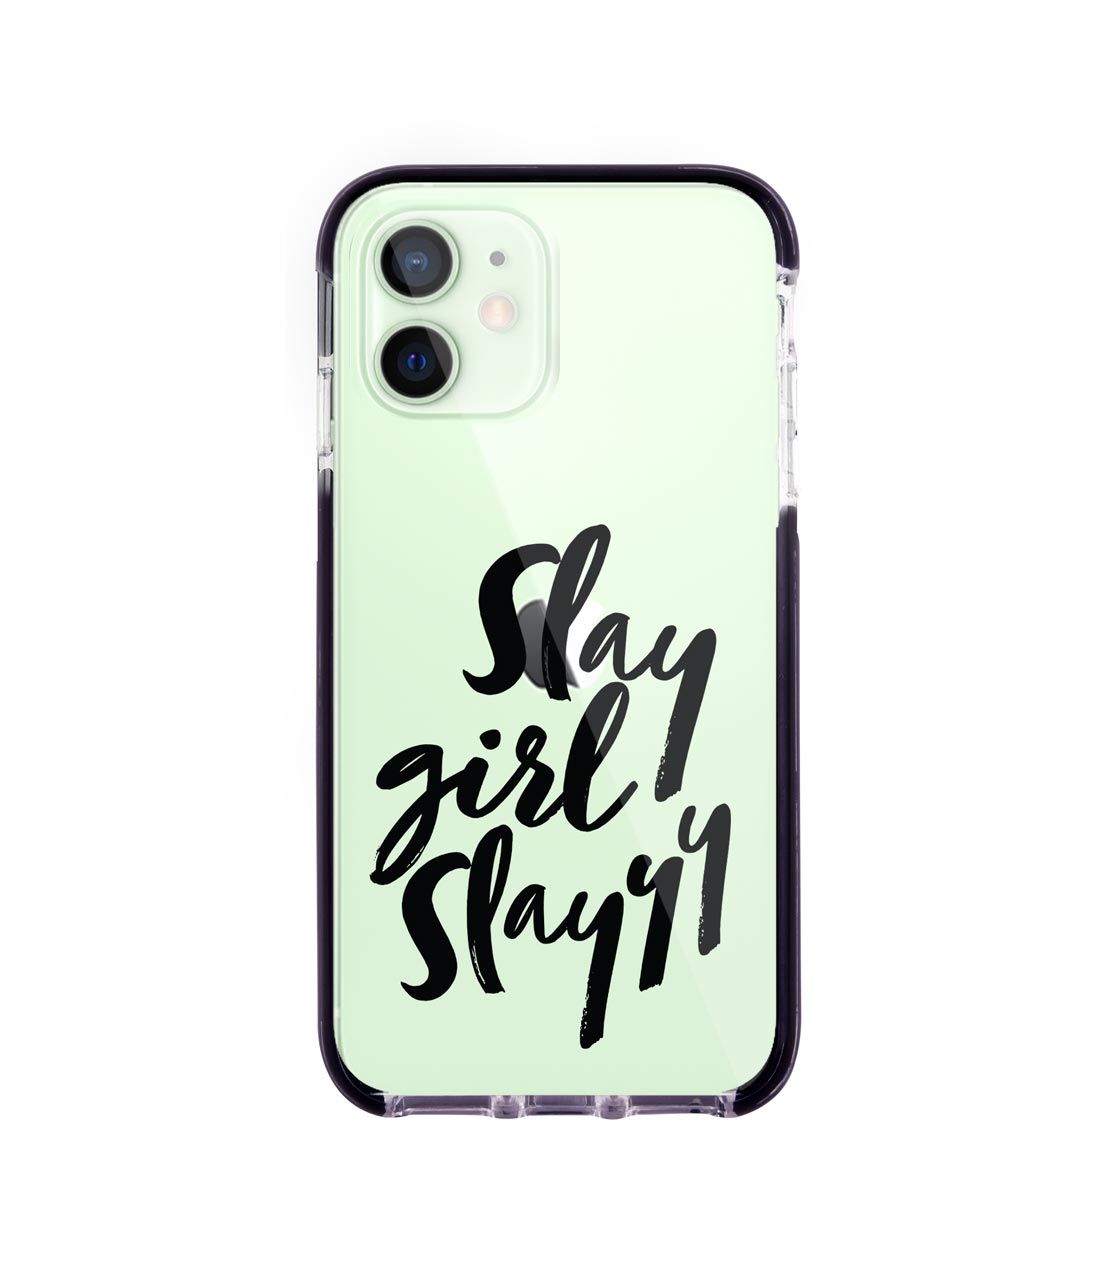 Slay girl Slay - Extreme Case for iPhone 12 Mini